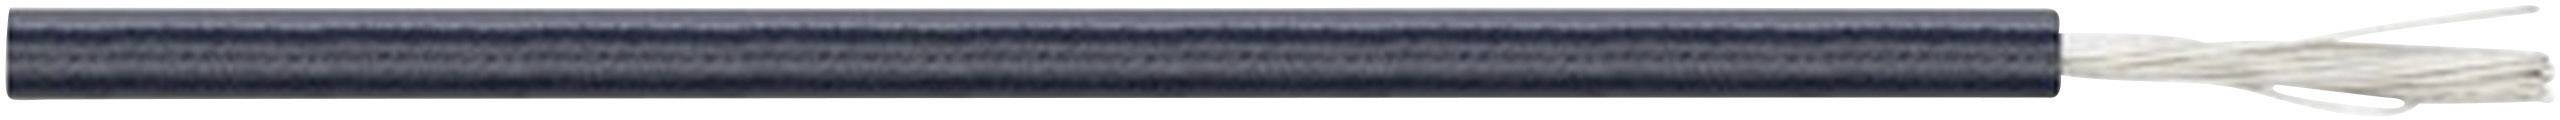 LAPP KABEL Litze Multi-Standard SC 1 1 x 0.75 mm² Grau LappKabel 4180506 100 m